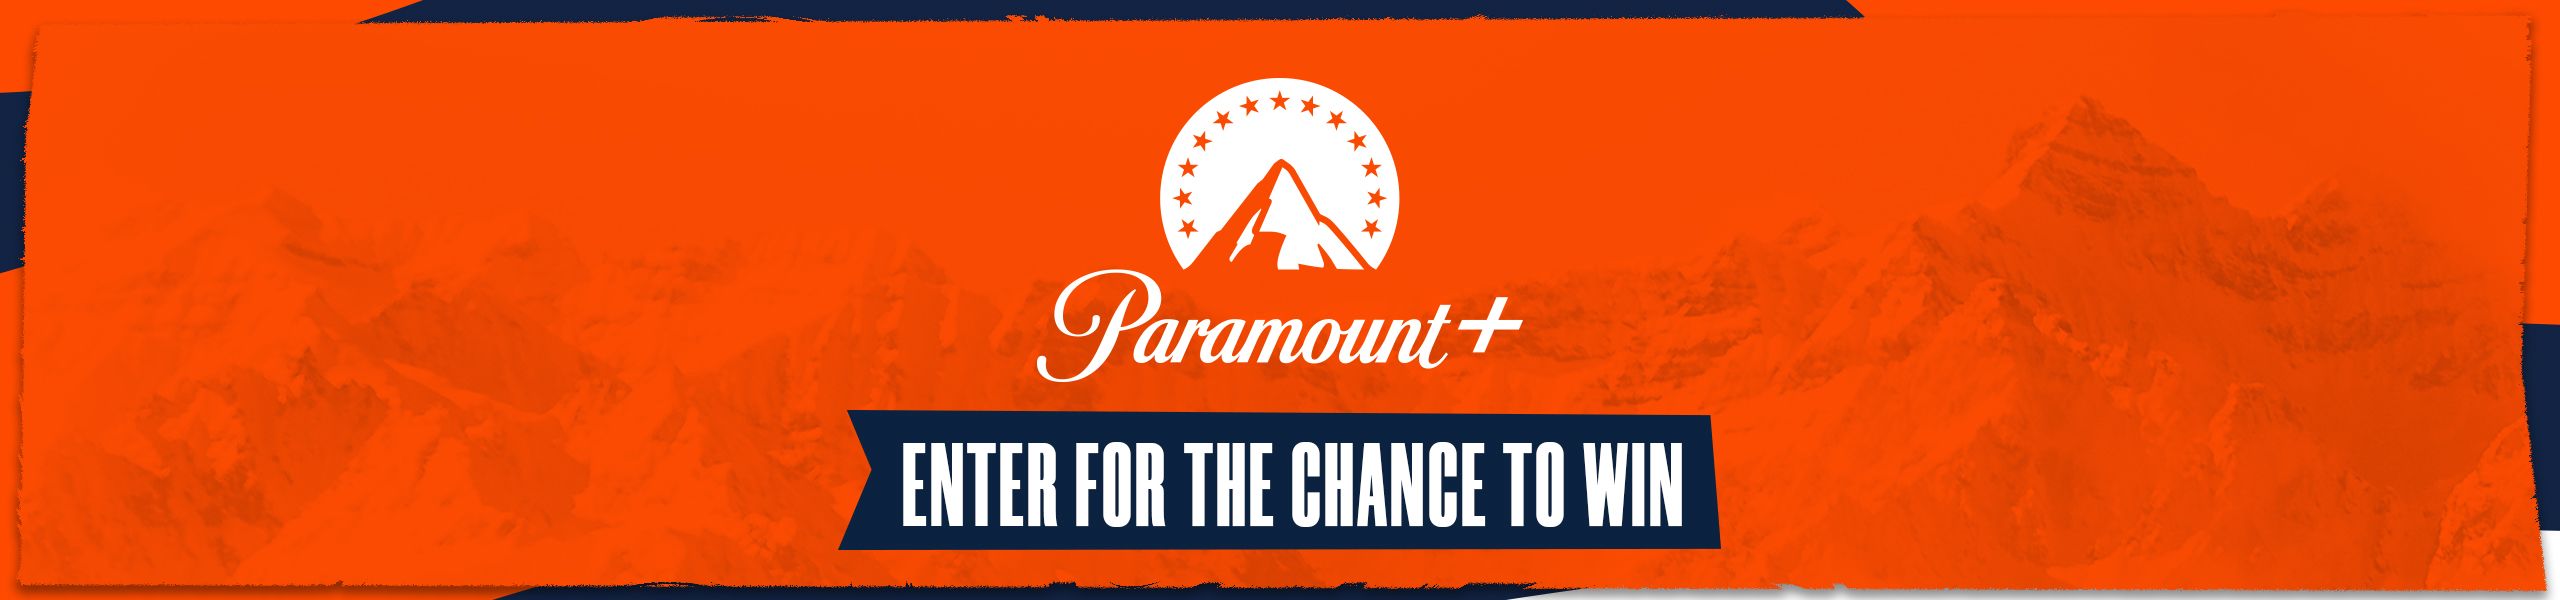 Denver Broncos  Paramount+ Promotion